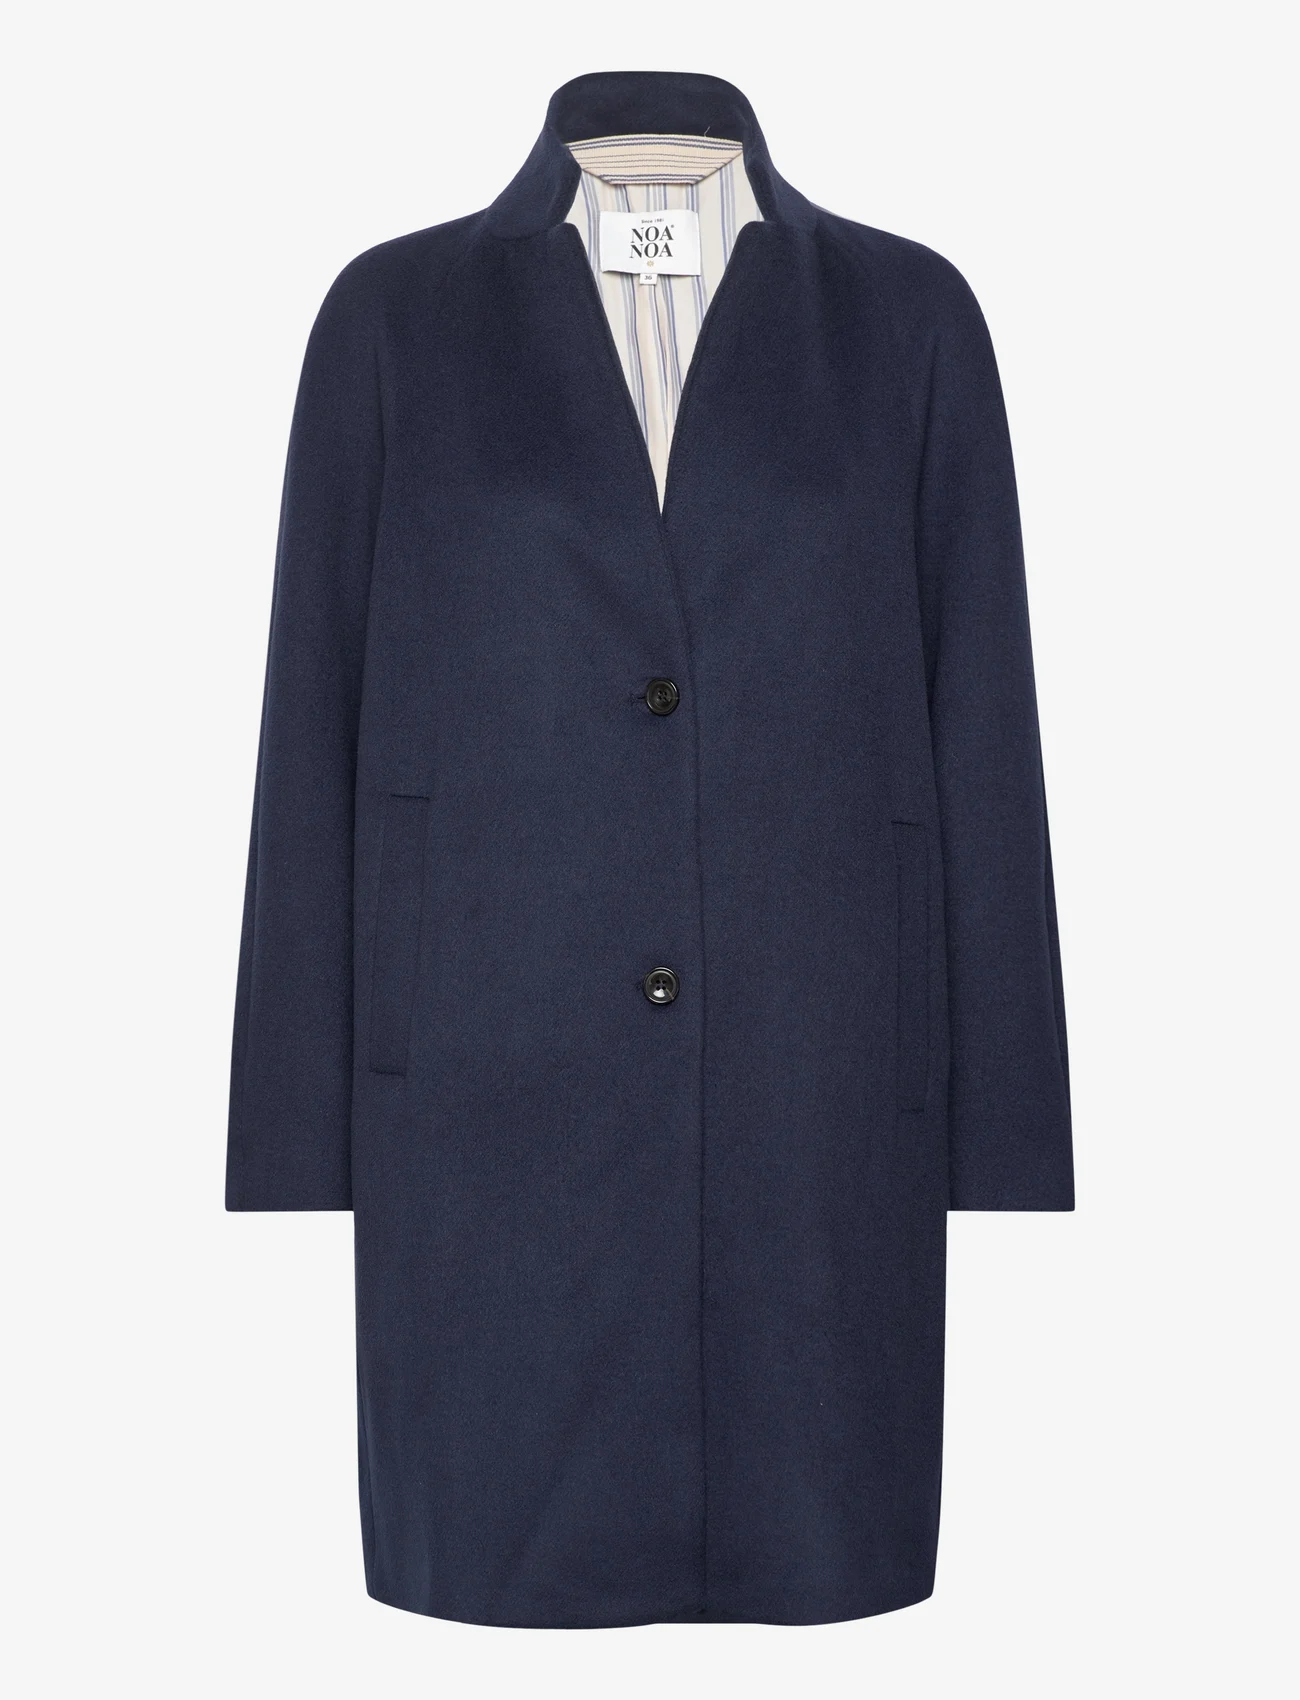 Noa Noa - CeciliaNN Coat - light coats - navy blazer - 0